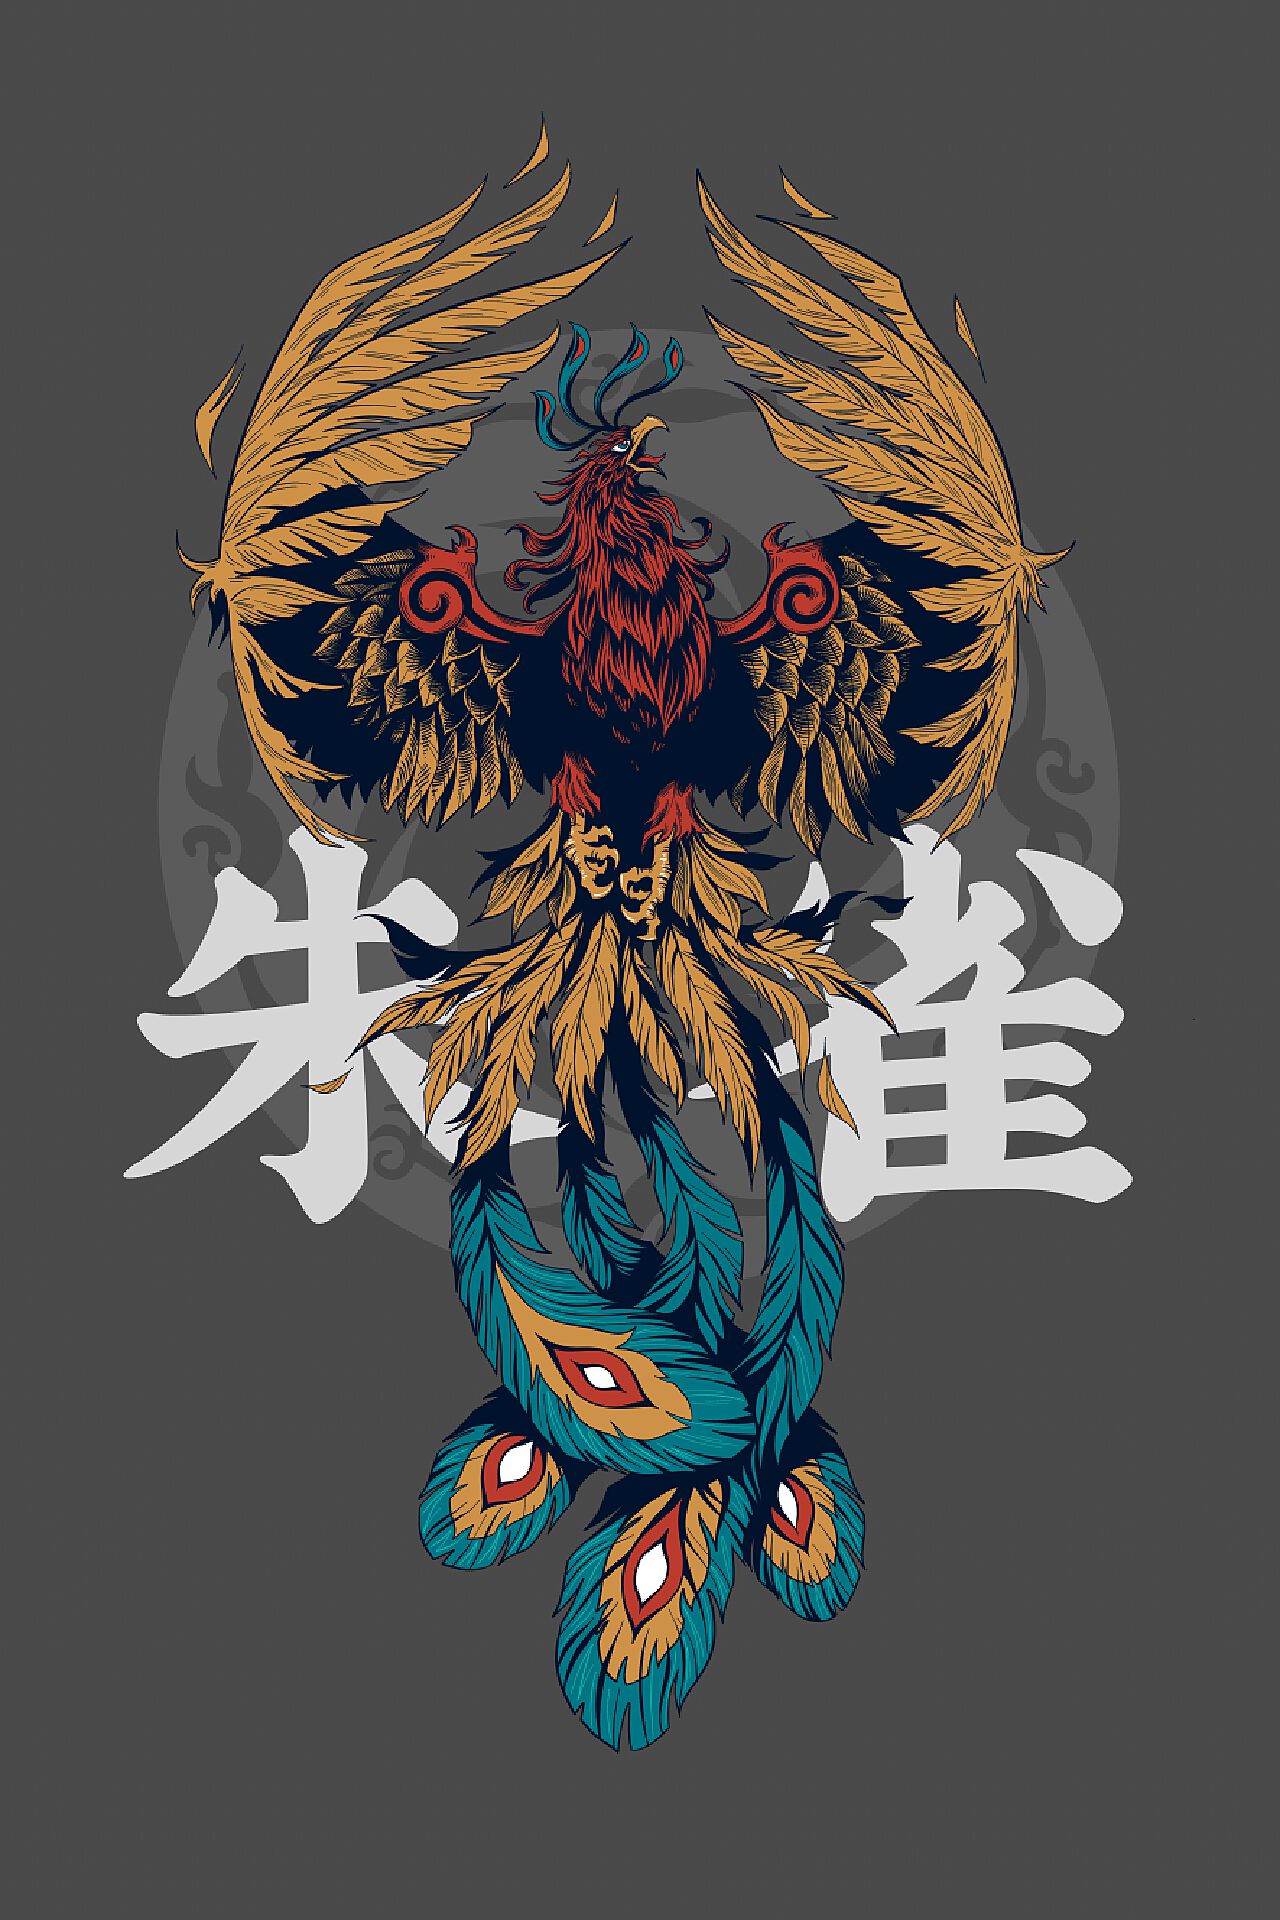 南方朱雀陵光神君 red phoenix (Zhu Que). Represents South, the summer season and ...